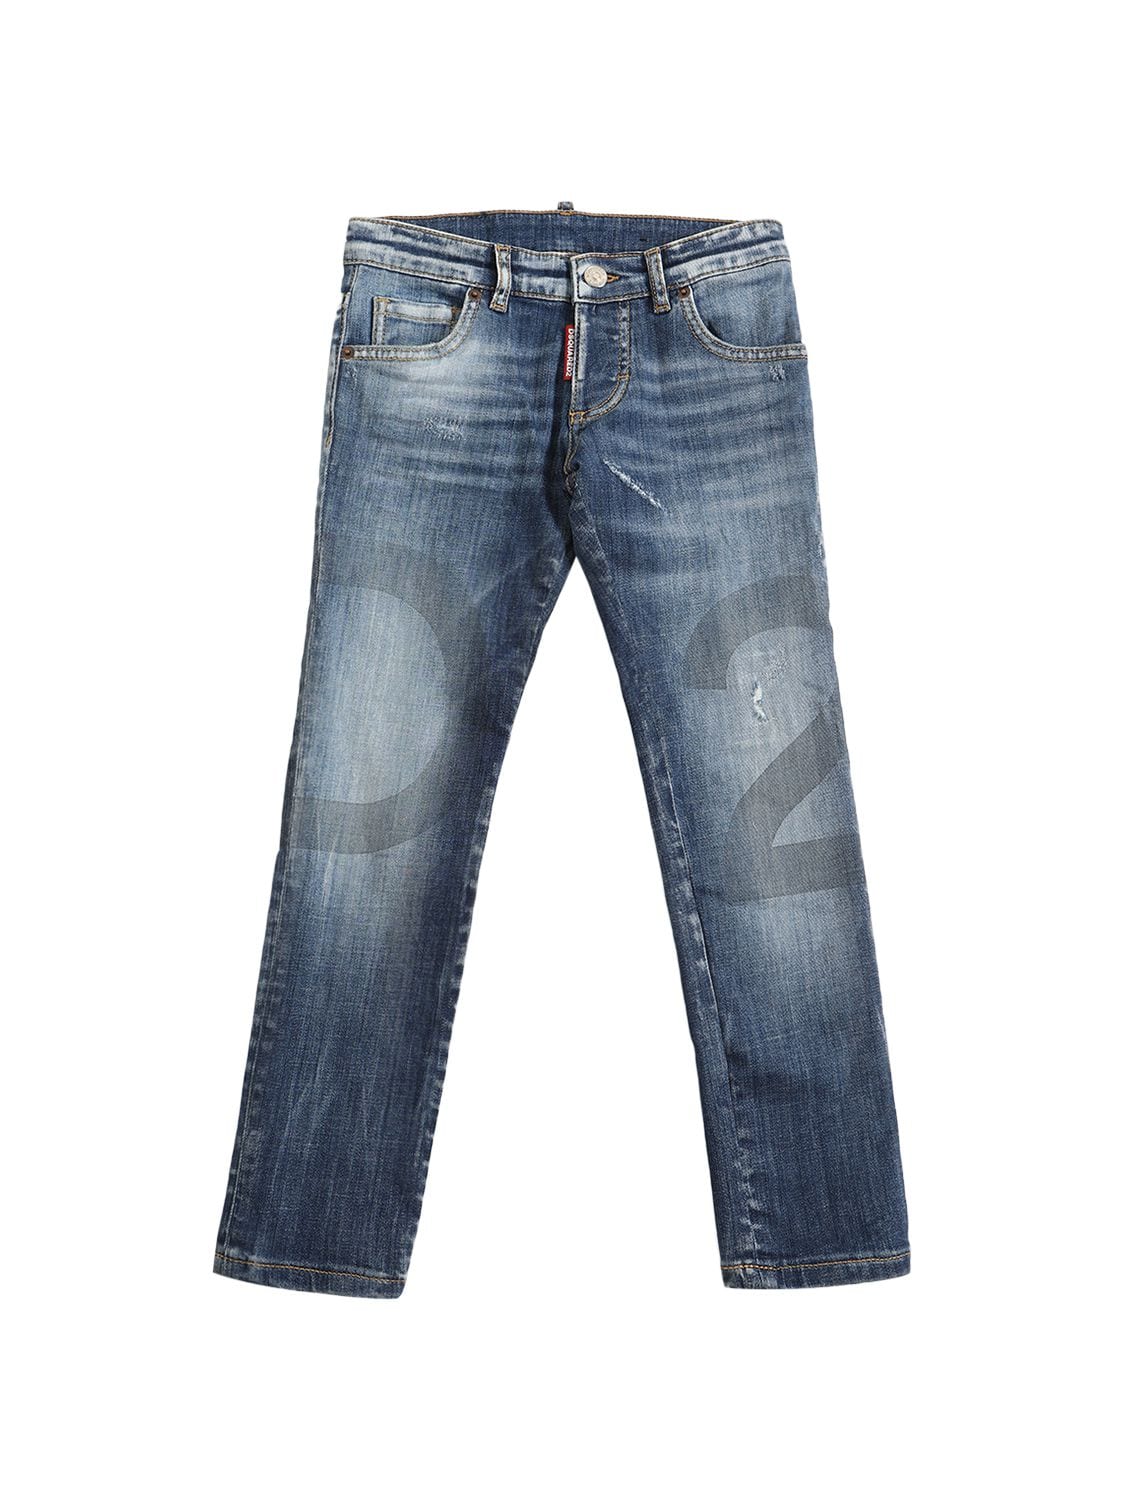 Cotton Denim Stonewashed Jeans